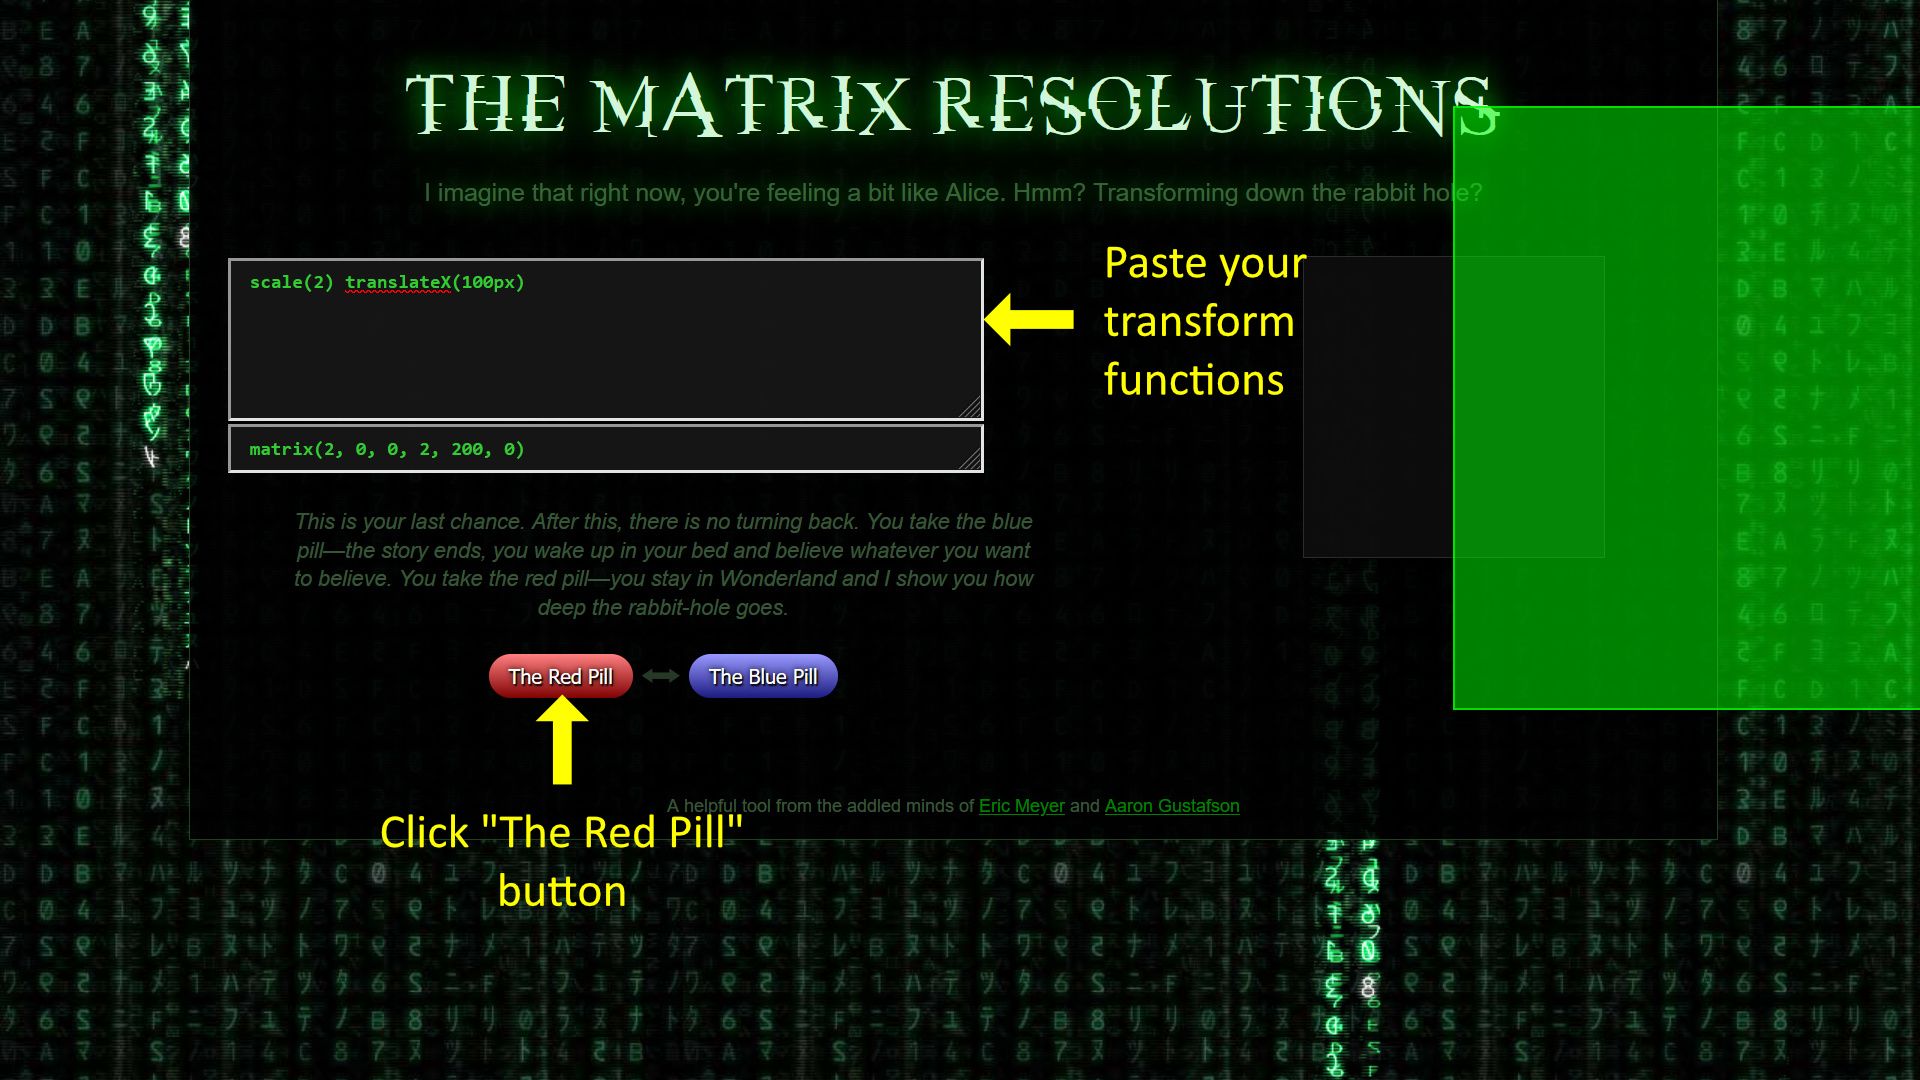 The matrix resolutions tool's screenshot